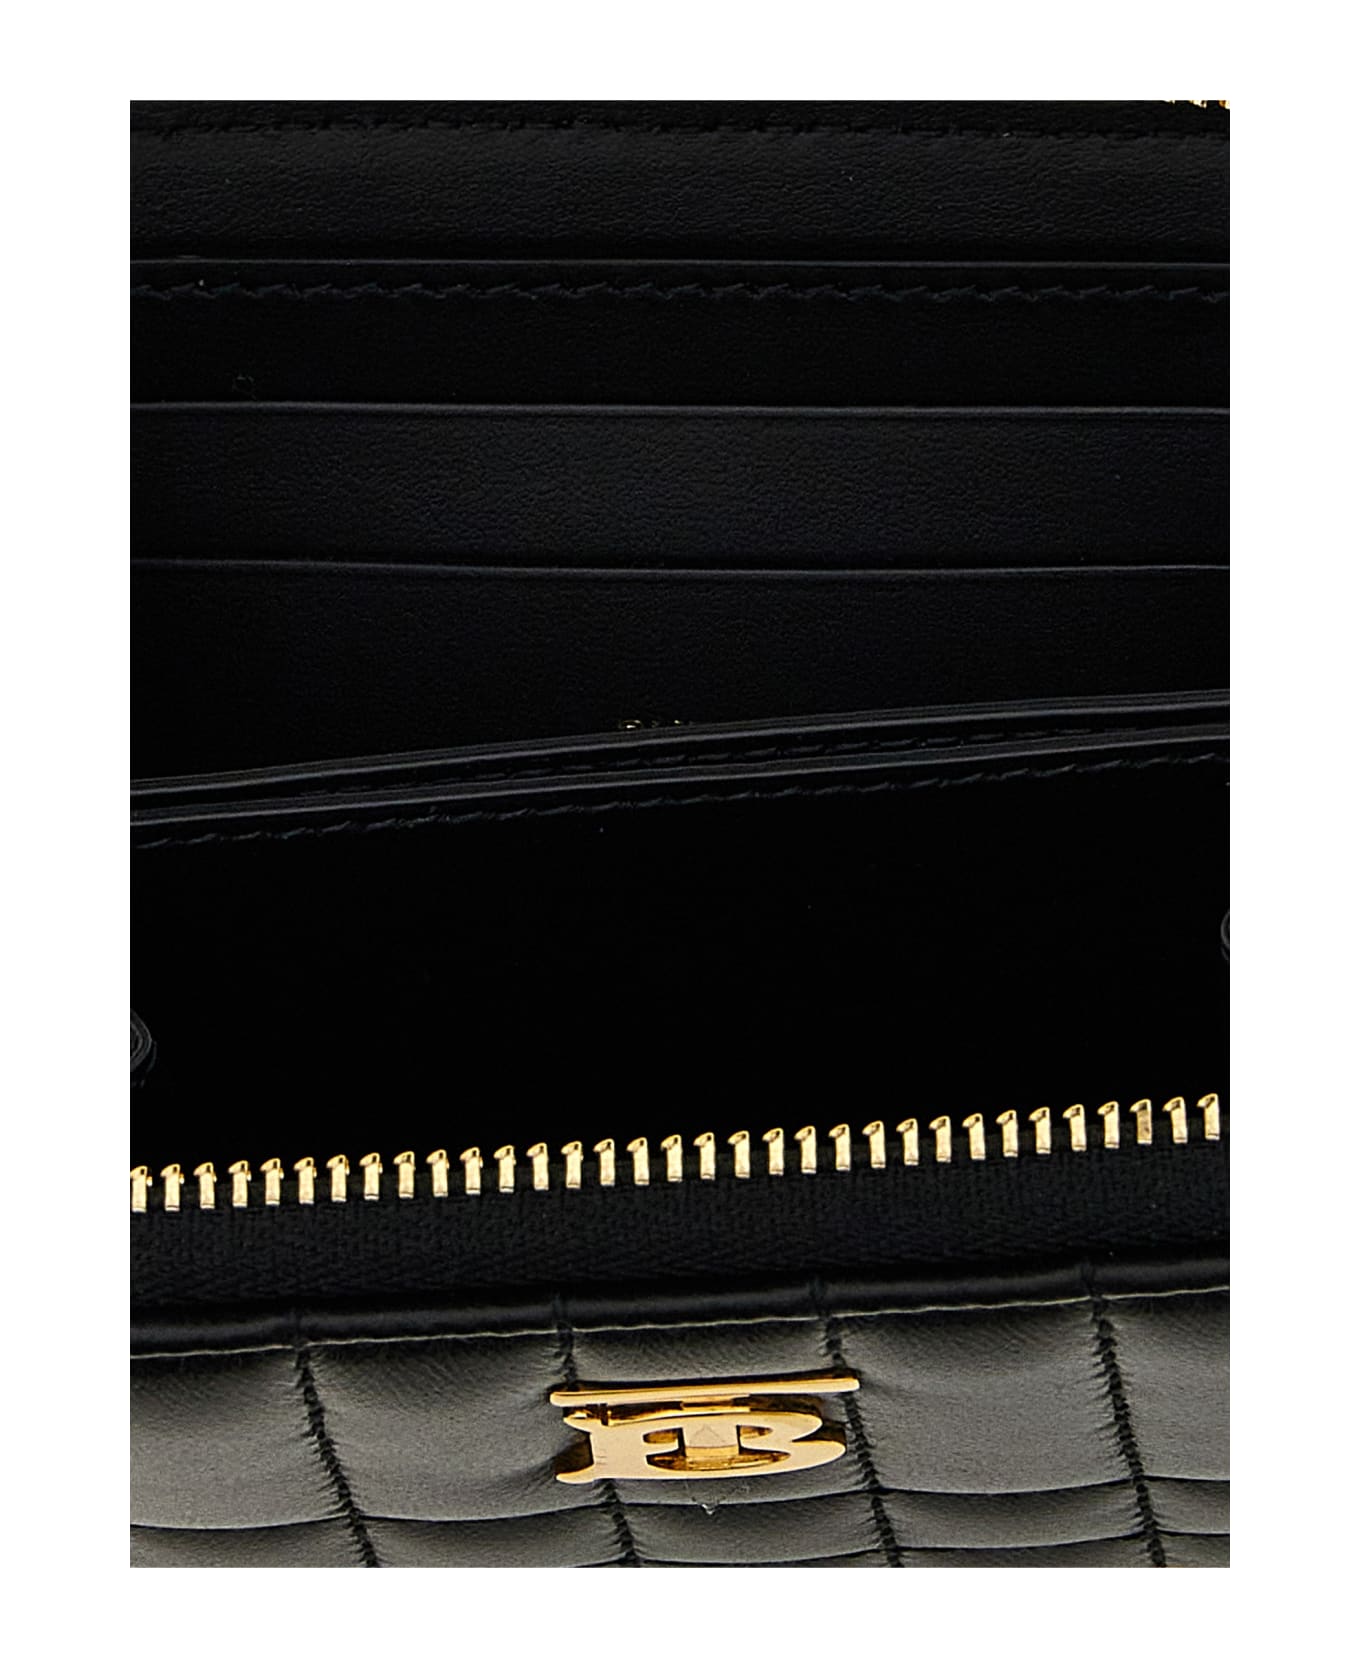 Burberry 'lola' Wallet - Black   財布